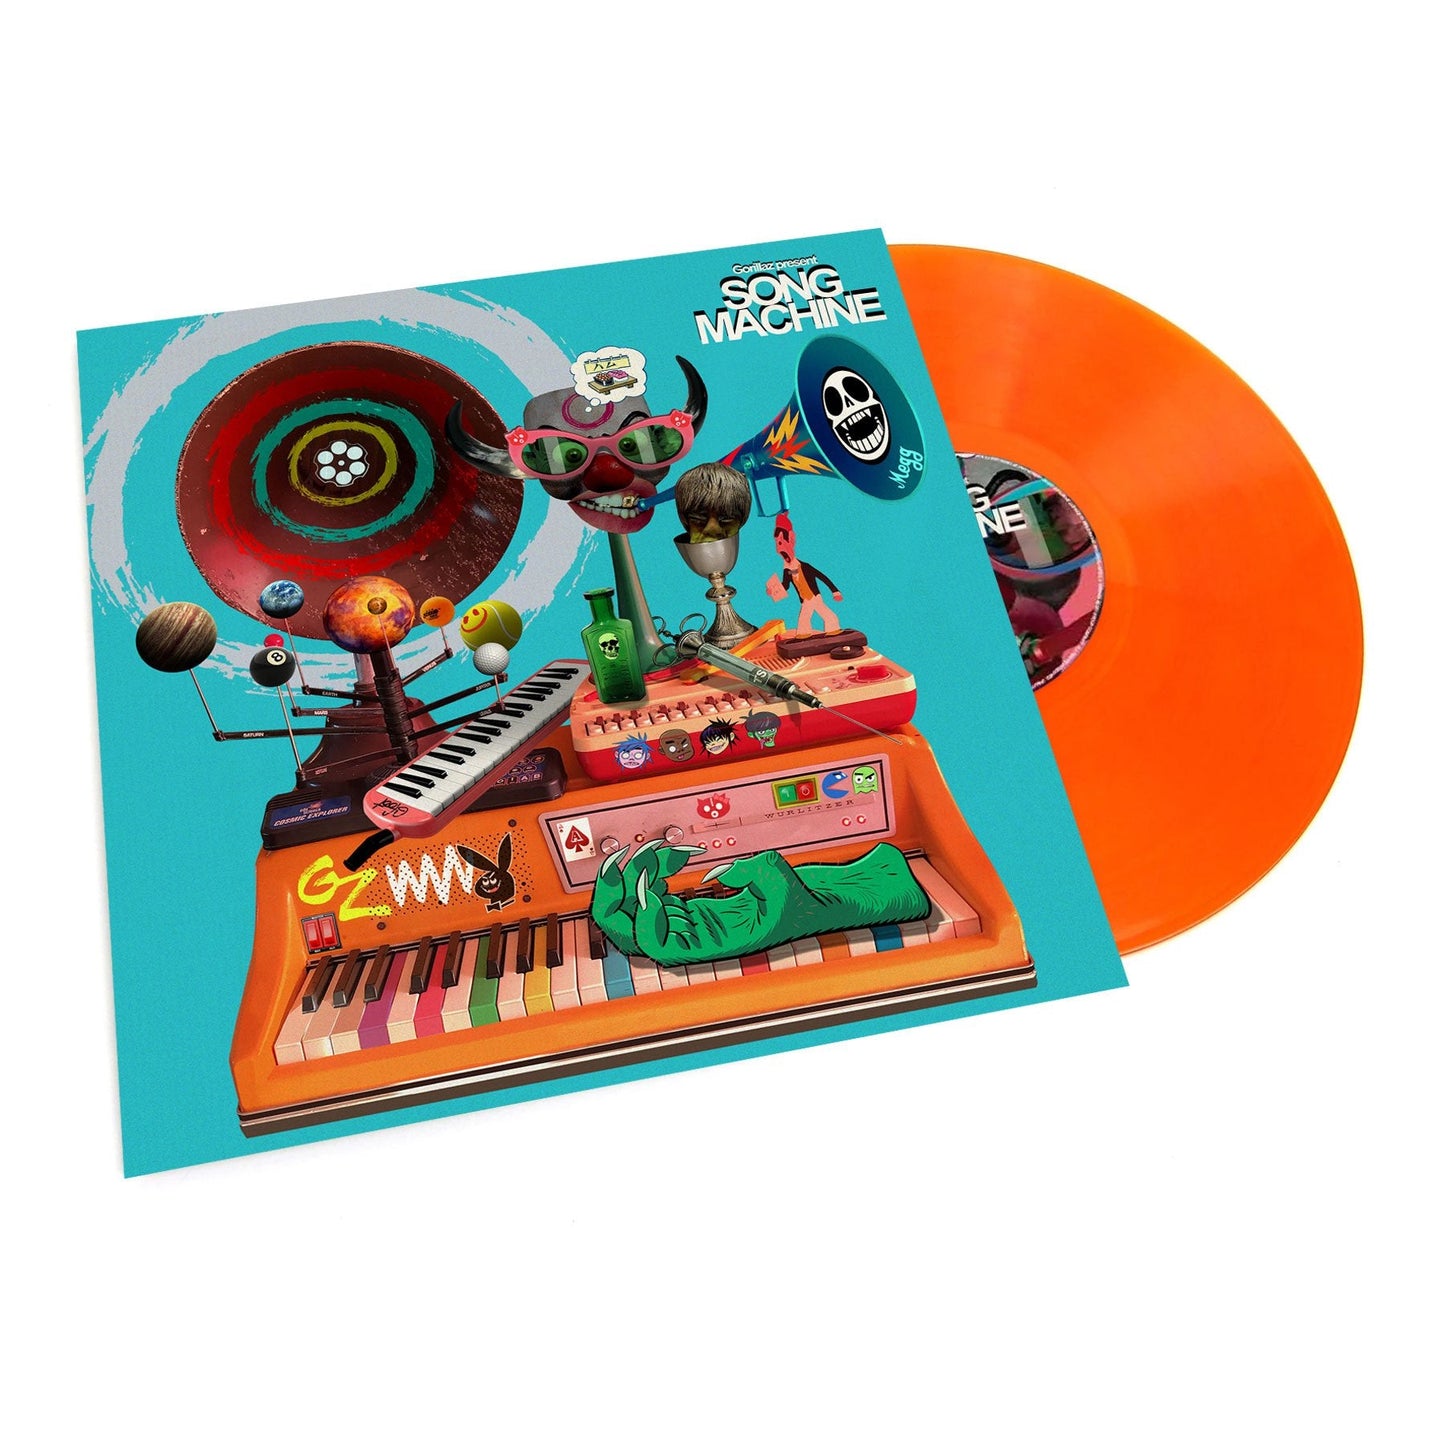 Gorillaz - Song Machine, Season One (Orange Vinyl, Indie Exclusive) - 190295192181 - LP's - Yellow Racket Records